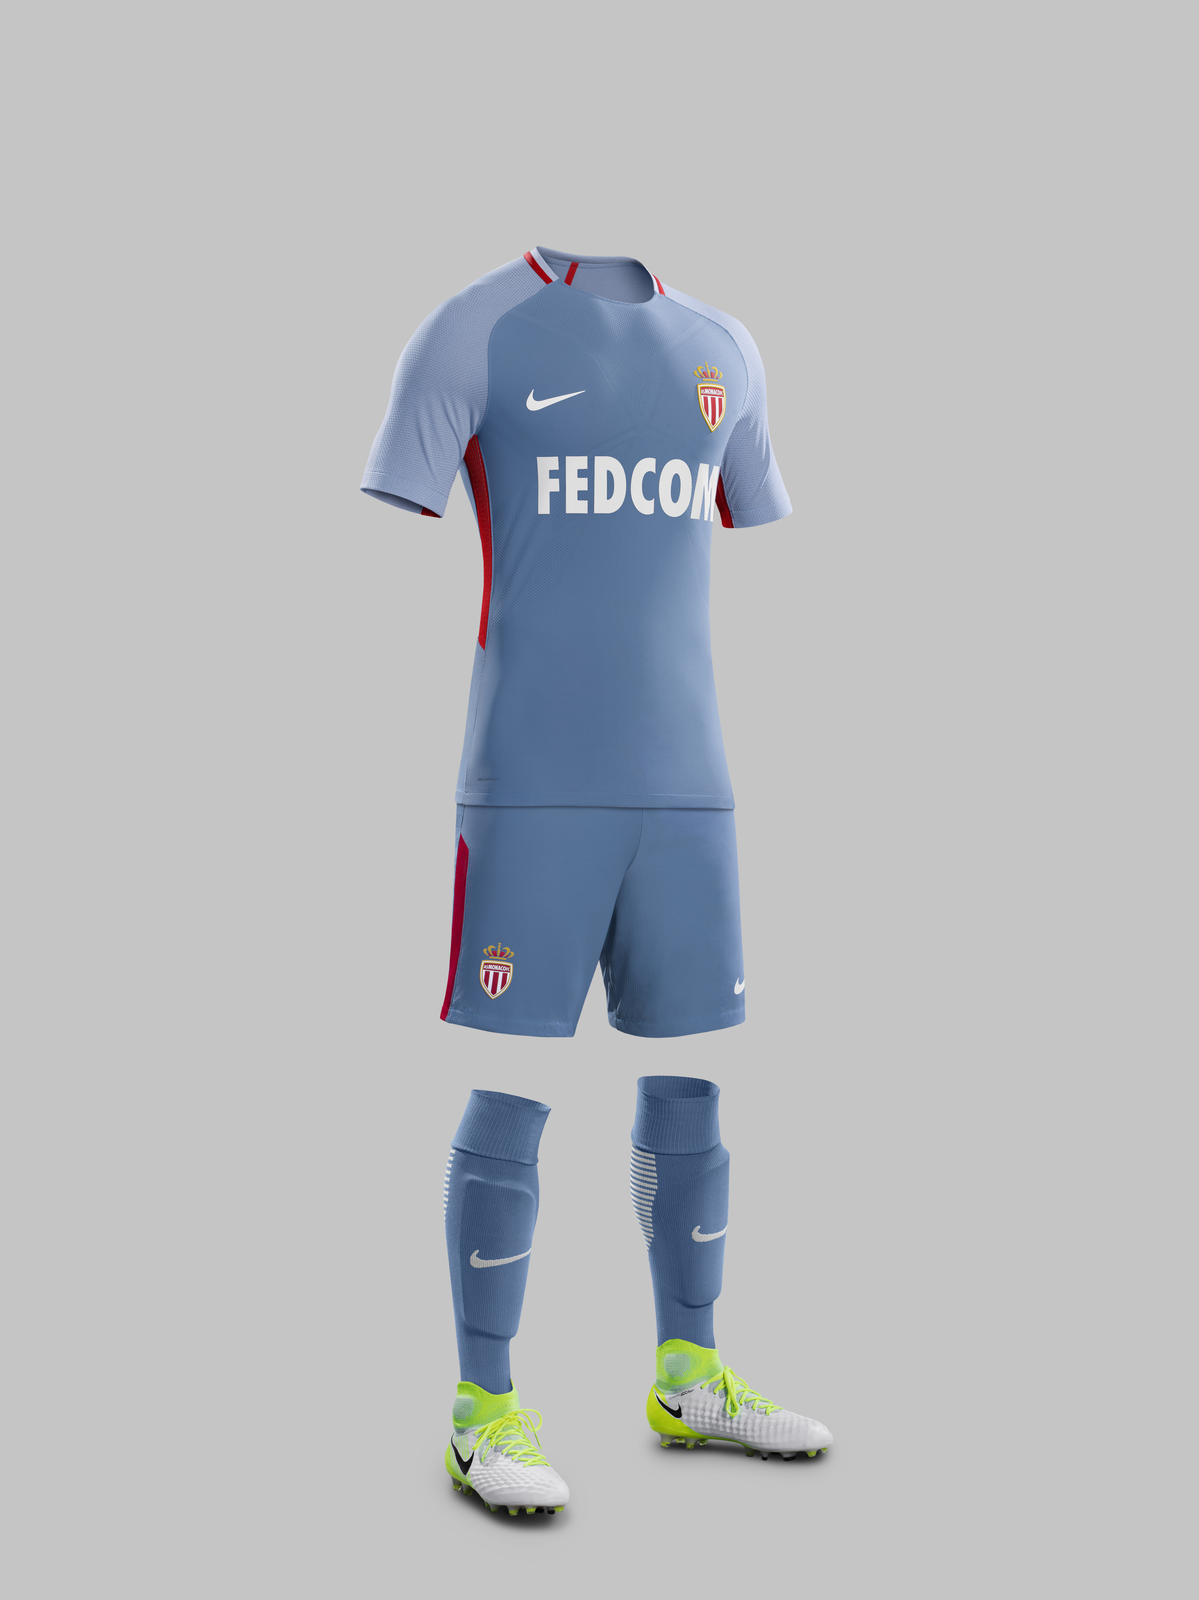 Nike launch AS Monaco's Away Kit!